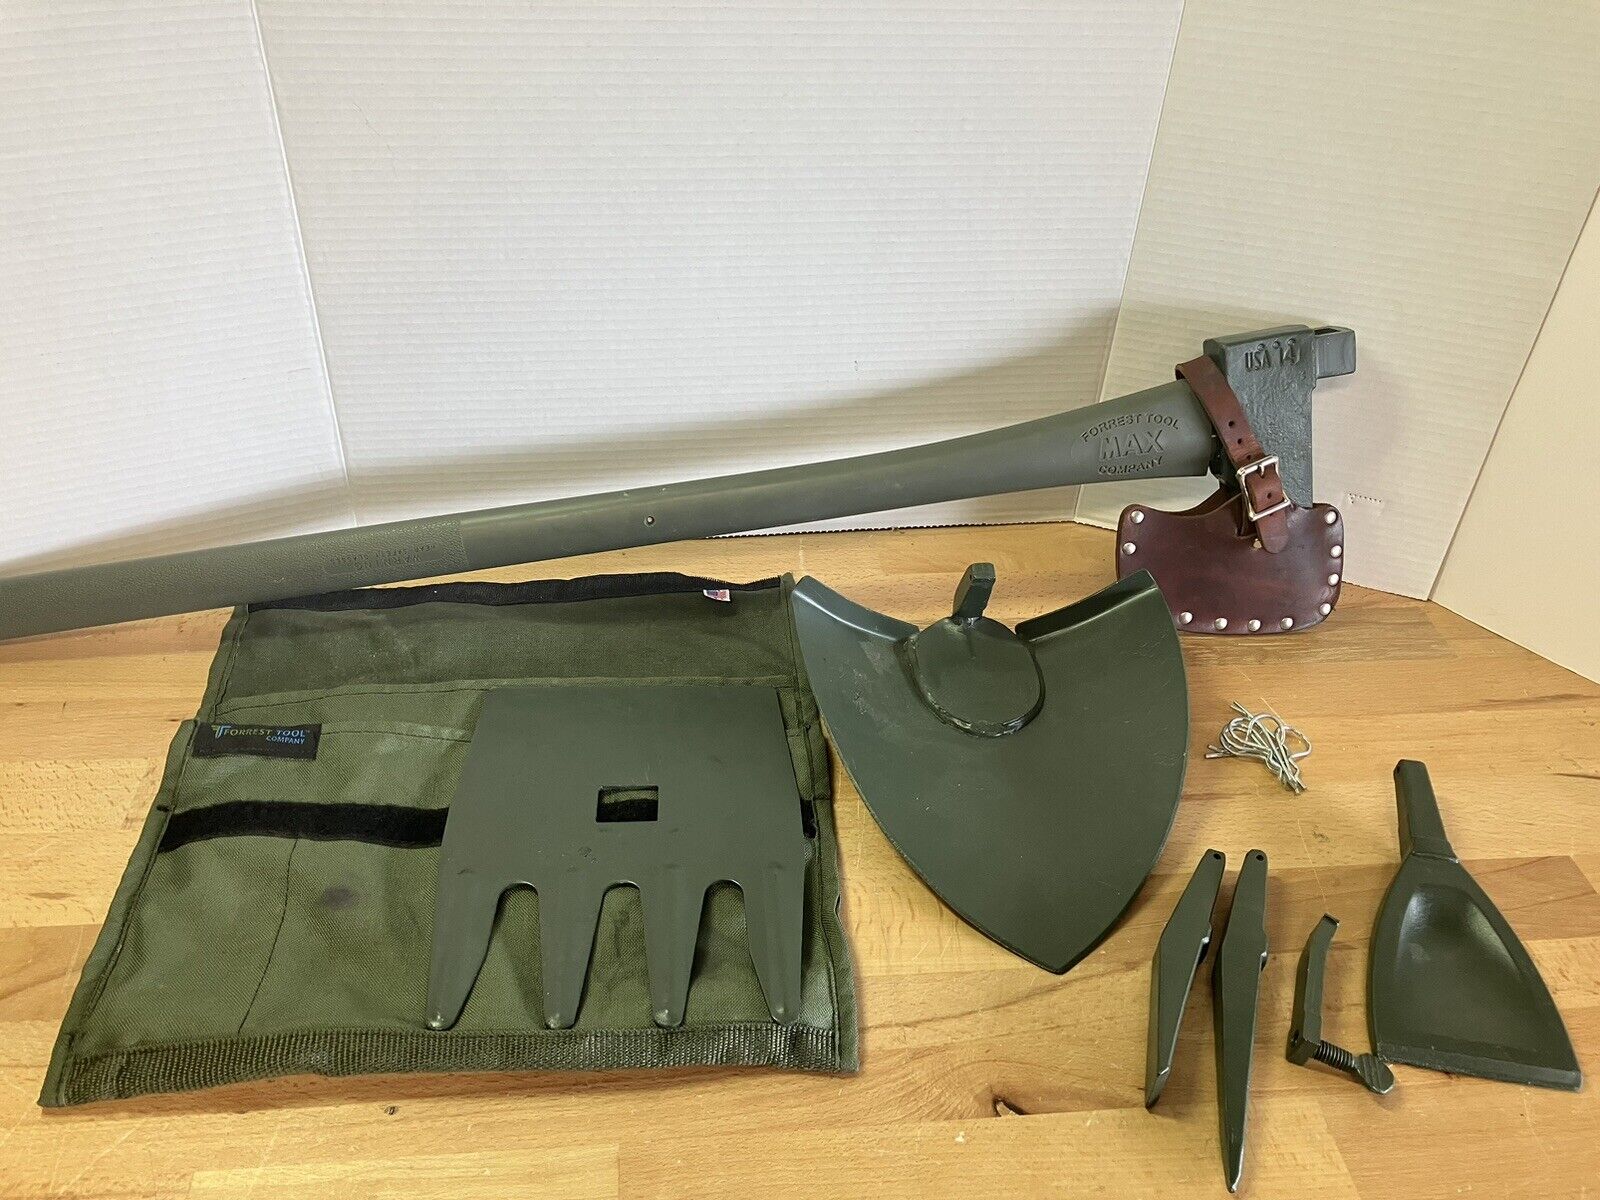 USGI Forrest Tool Co MAX Military Axe Set W/ Shovel, Picks, and Rake Hoe Attach